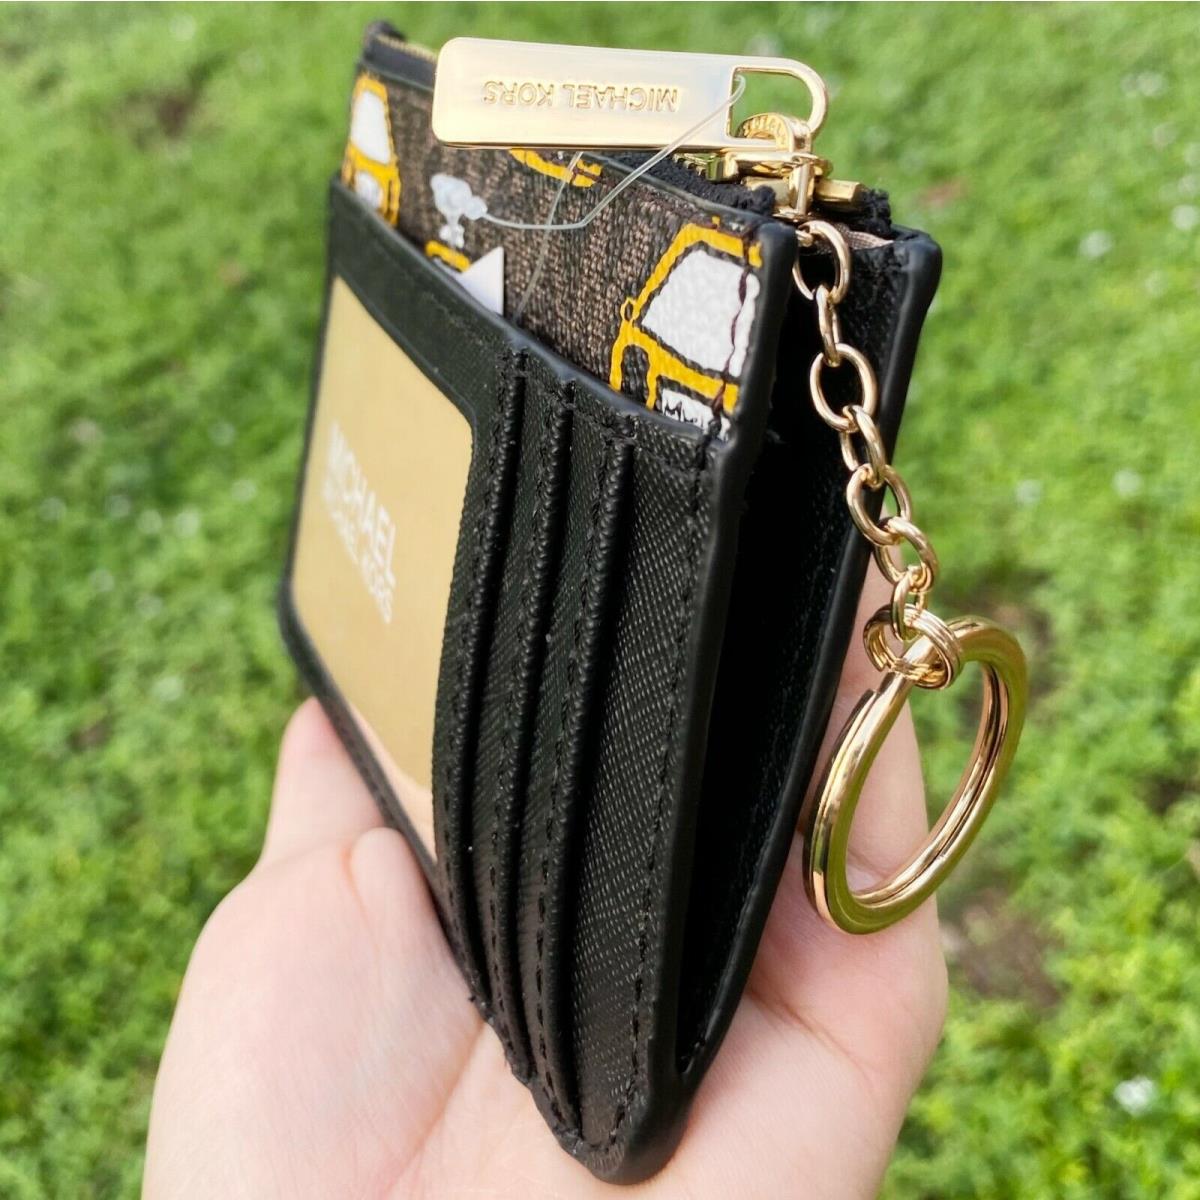 Michael Kors wallet 